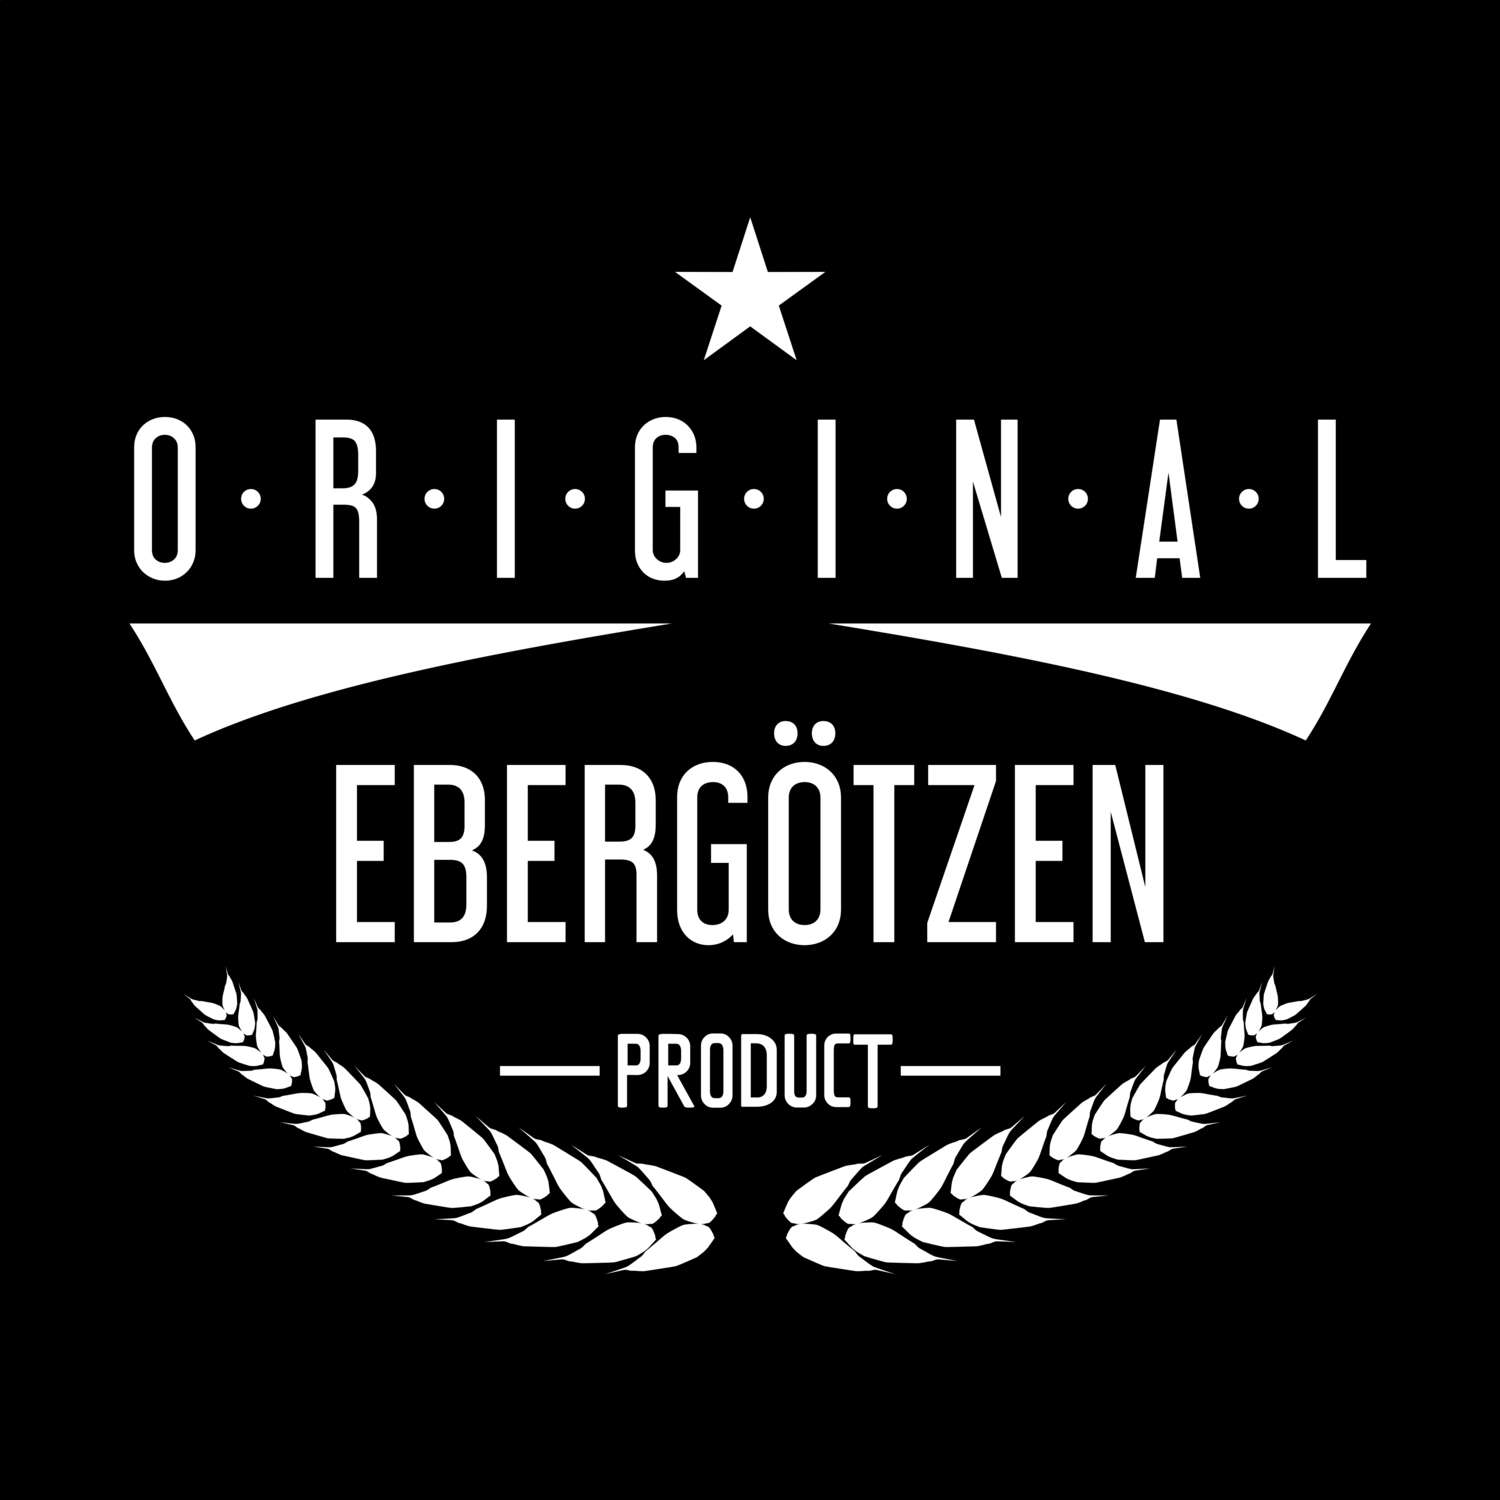 Ebergötzen T-Shirt »Original Product«